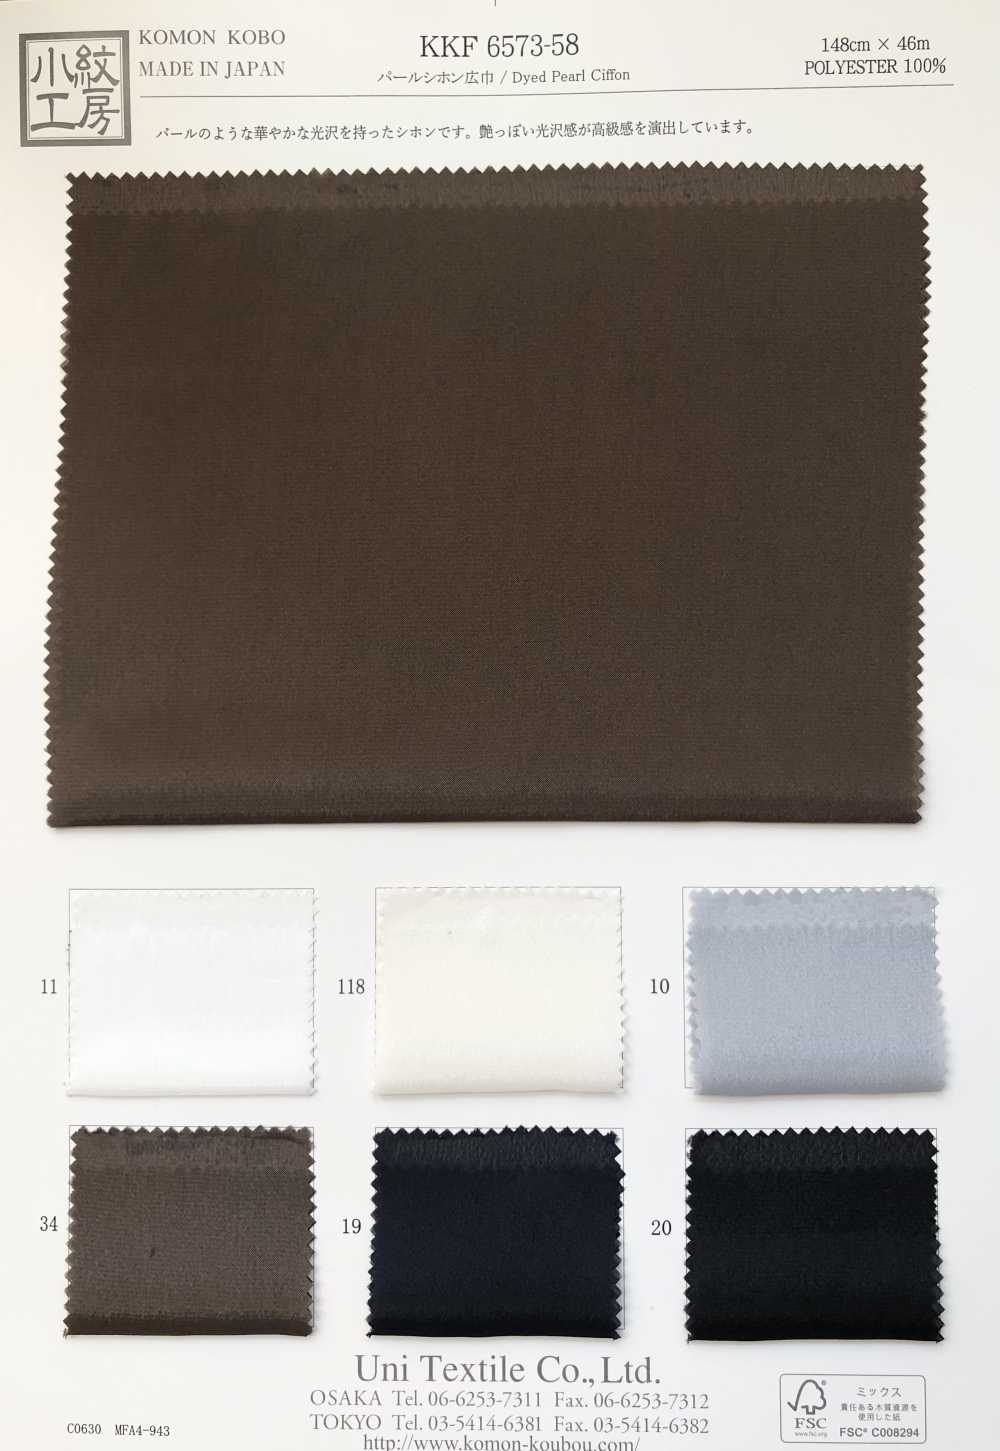 KKF6573-58 Larghezza Ampia In Chiffon Perlato[Tessile / Tessuto] Uni Textile